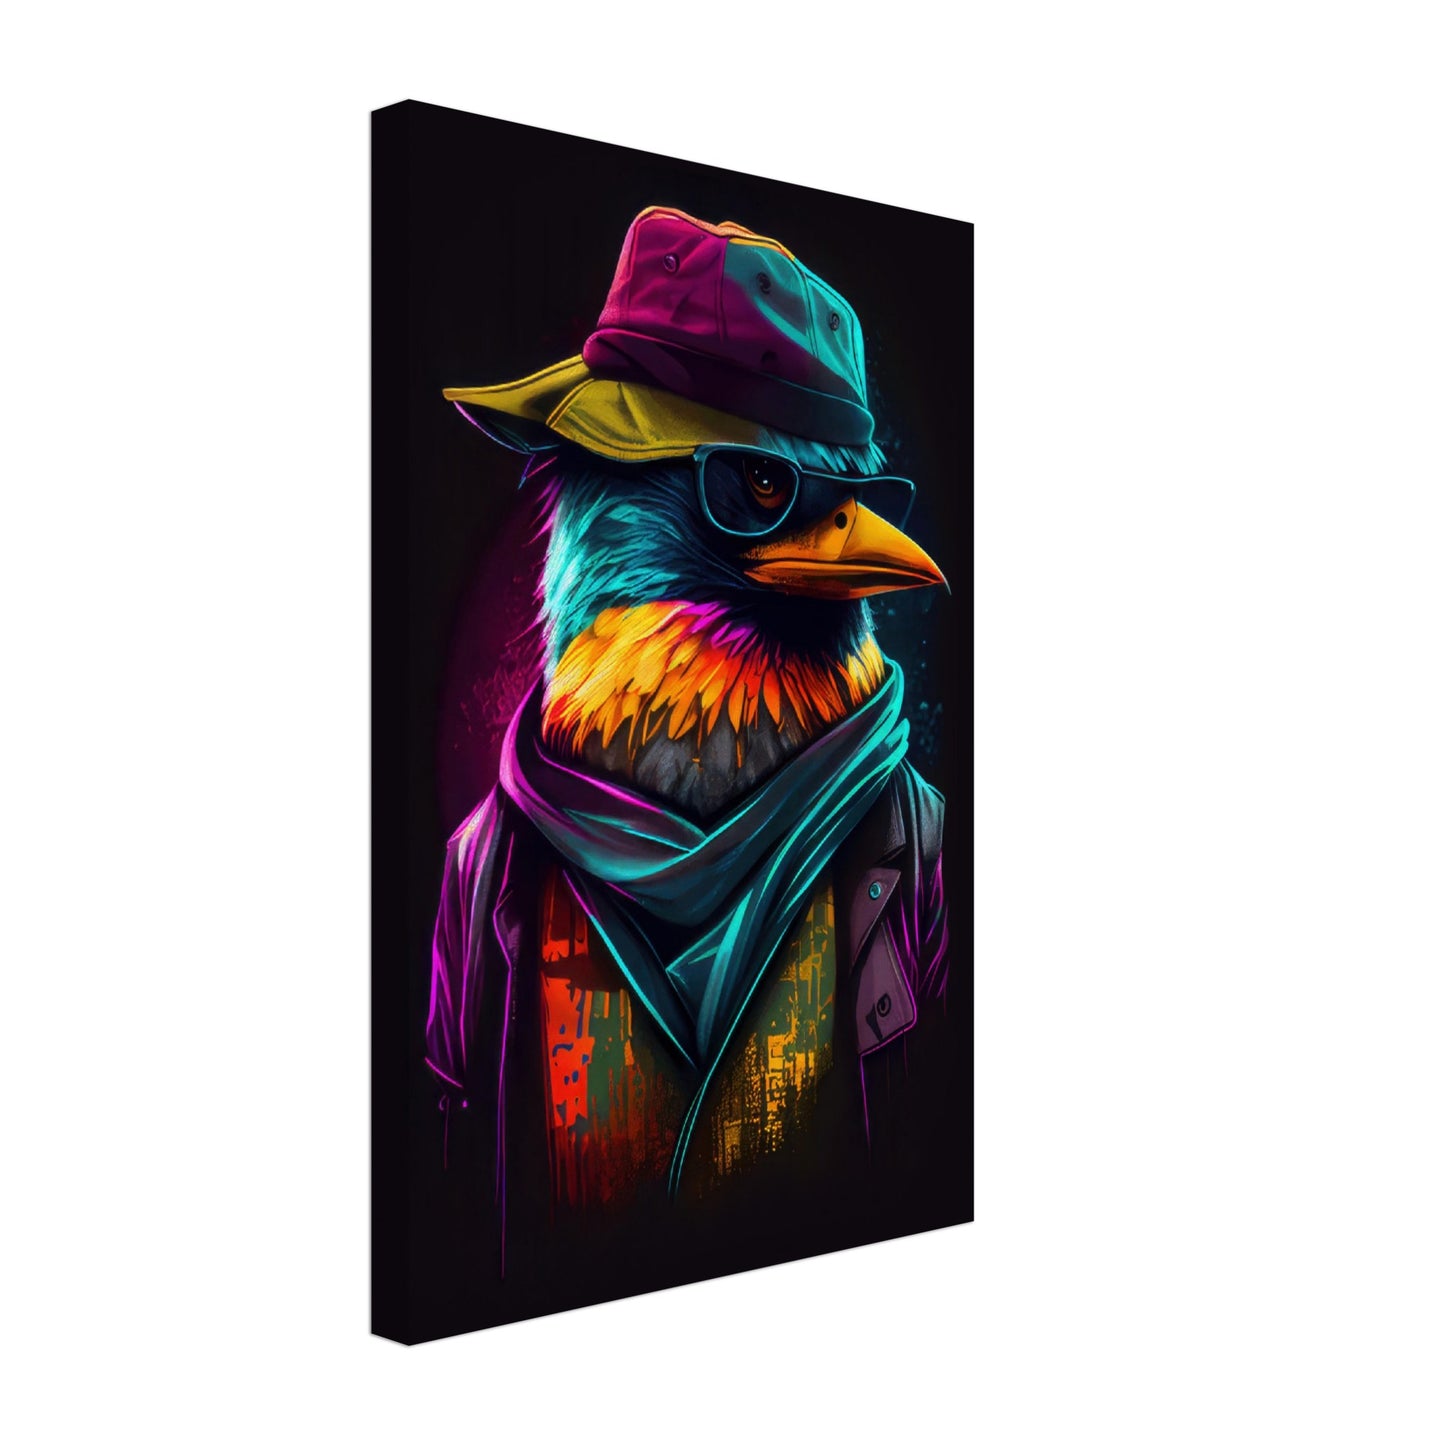 Flying High - Vögel Wandbild - Crazy Wildlife Leinwand ColorWorld im Hochformat - Coole Tiere & Animals Kunstdruck